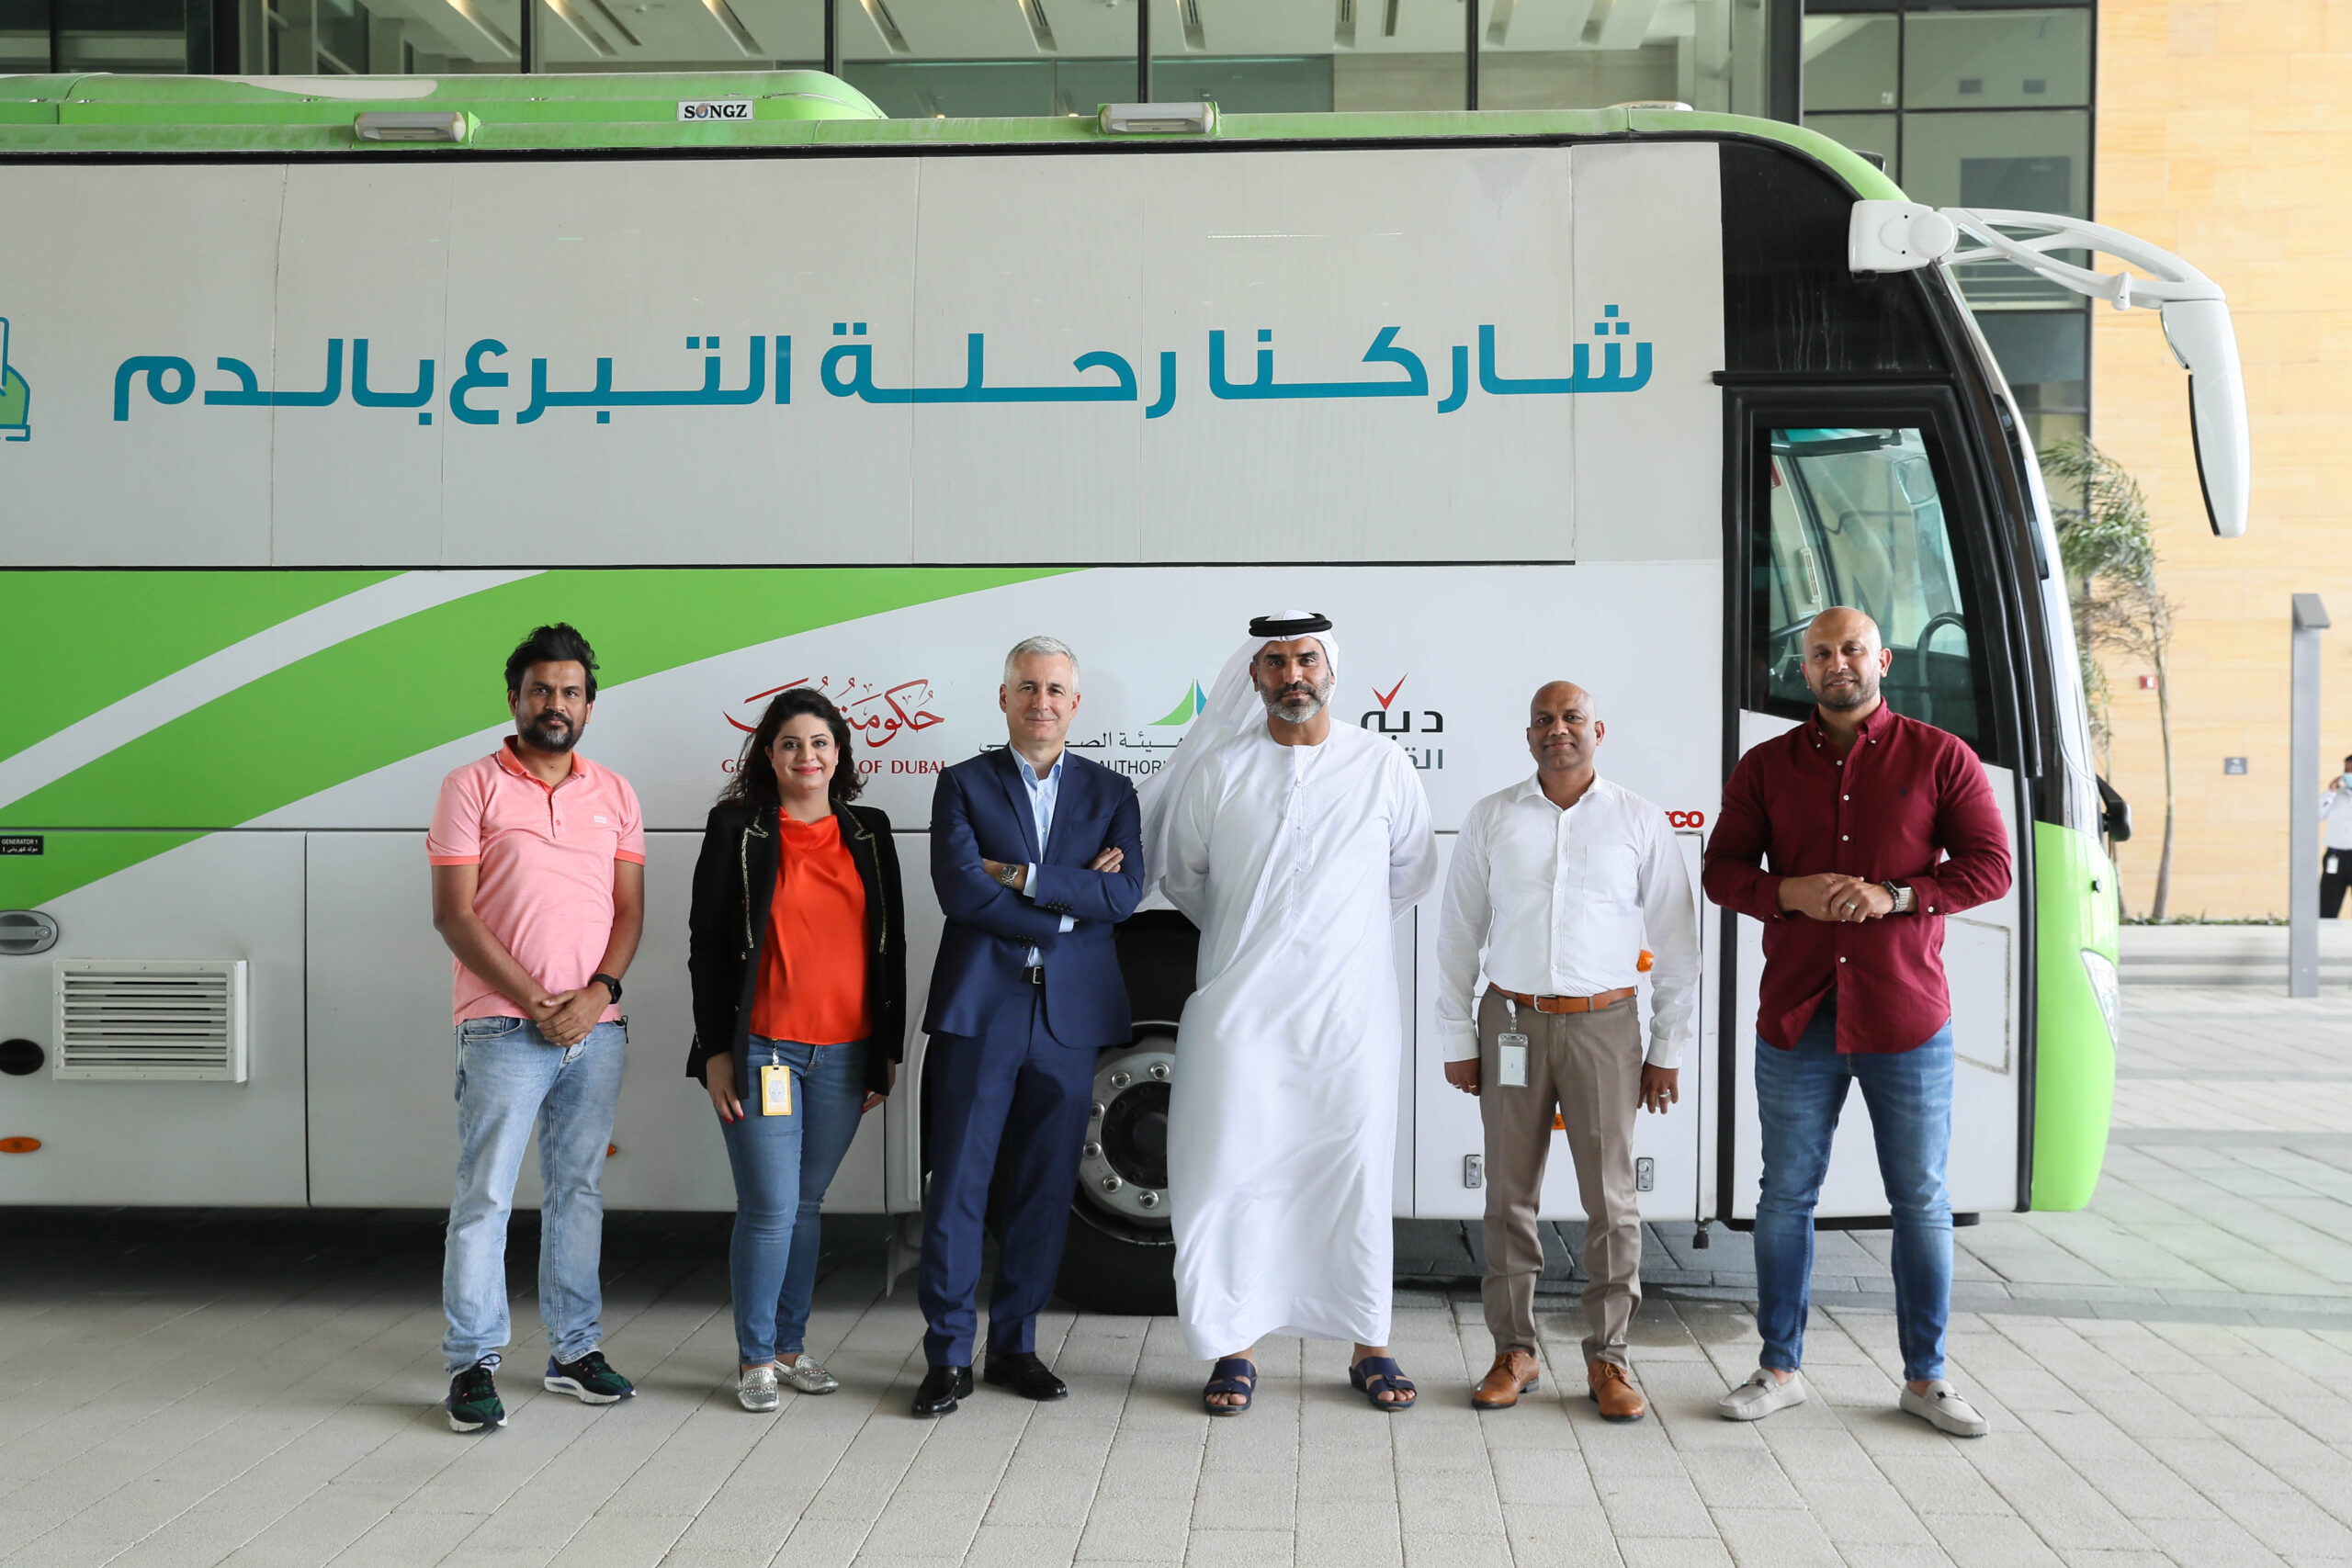 Dubai Healthcare Authority and Bristol Myers Squibb unite to organize blood donation drive at Dubai Science Park